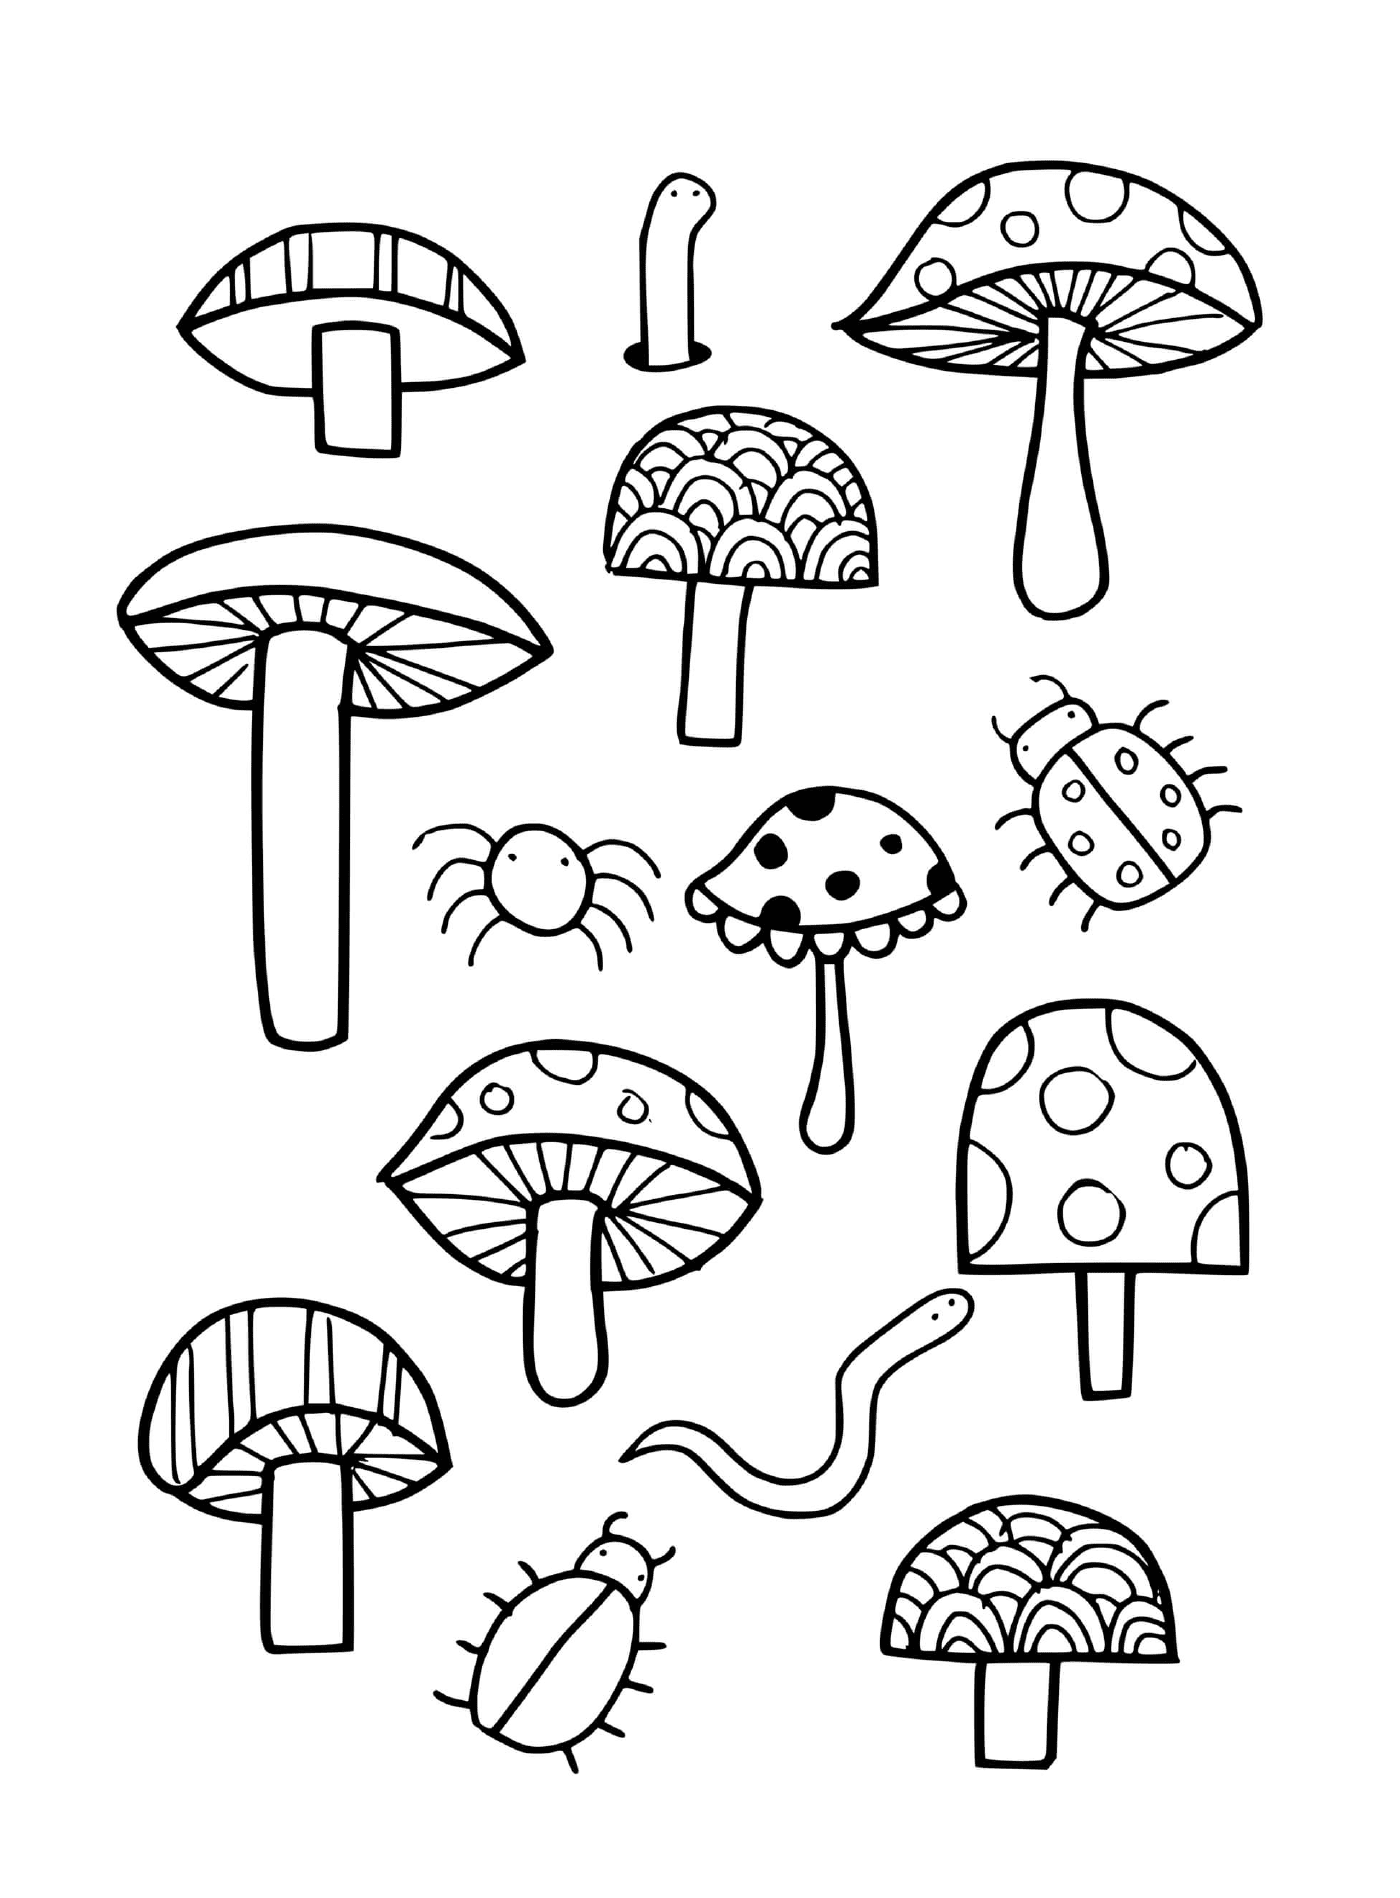  Mushrooms, ladybugs and spiders drawn 